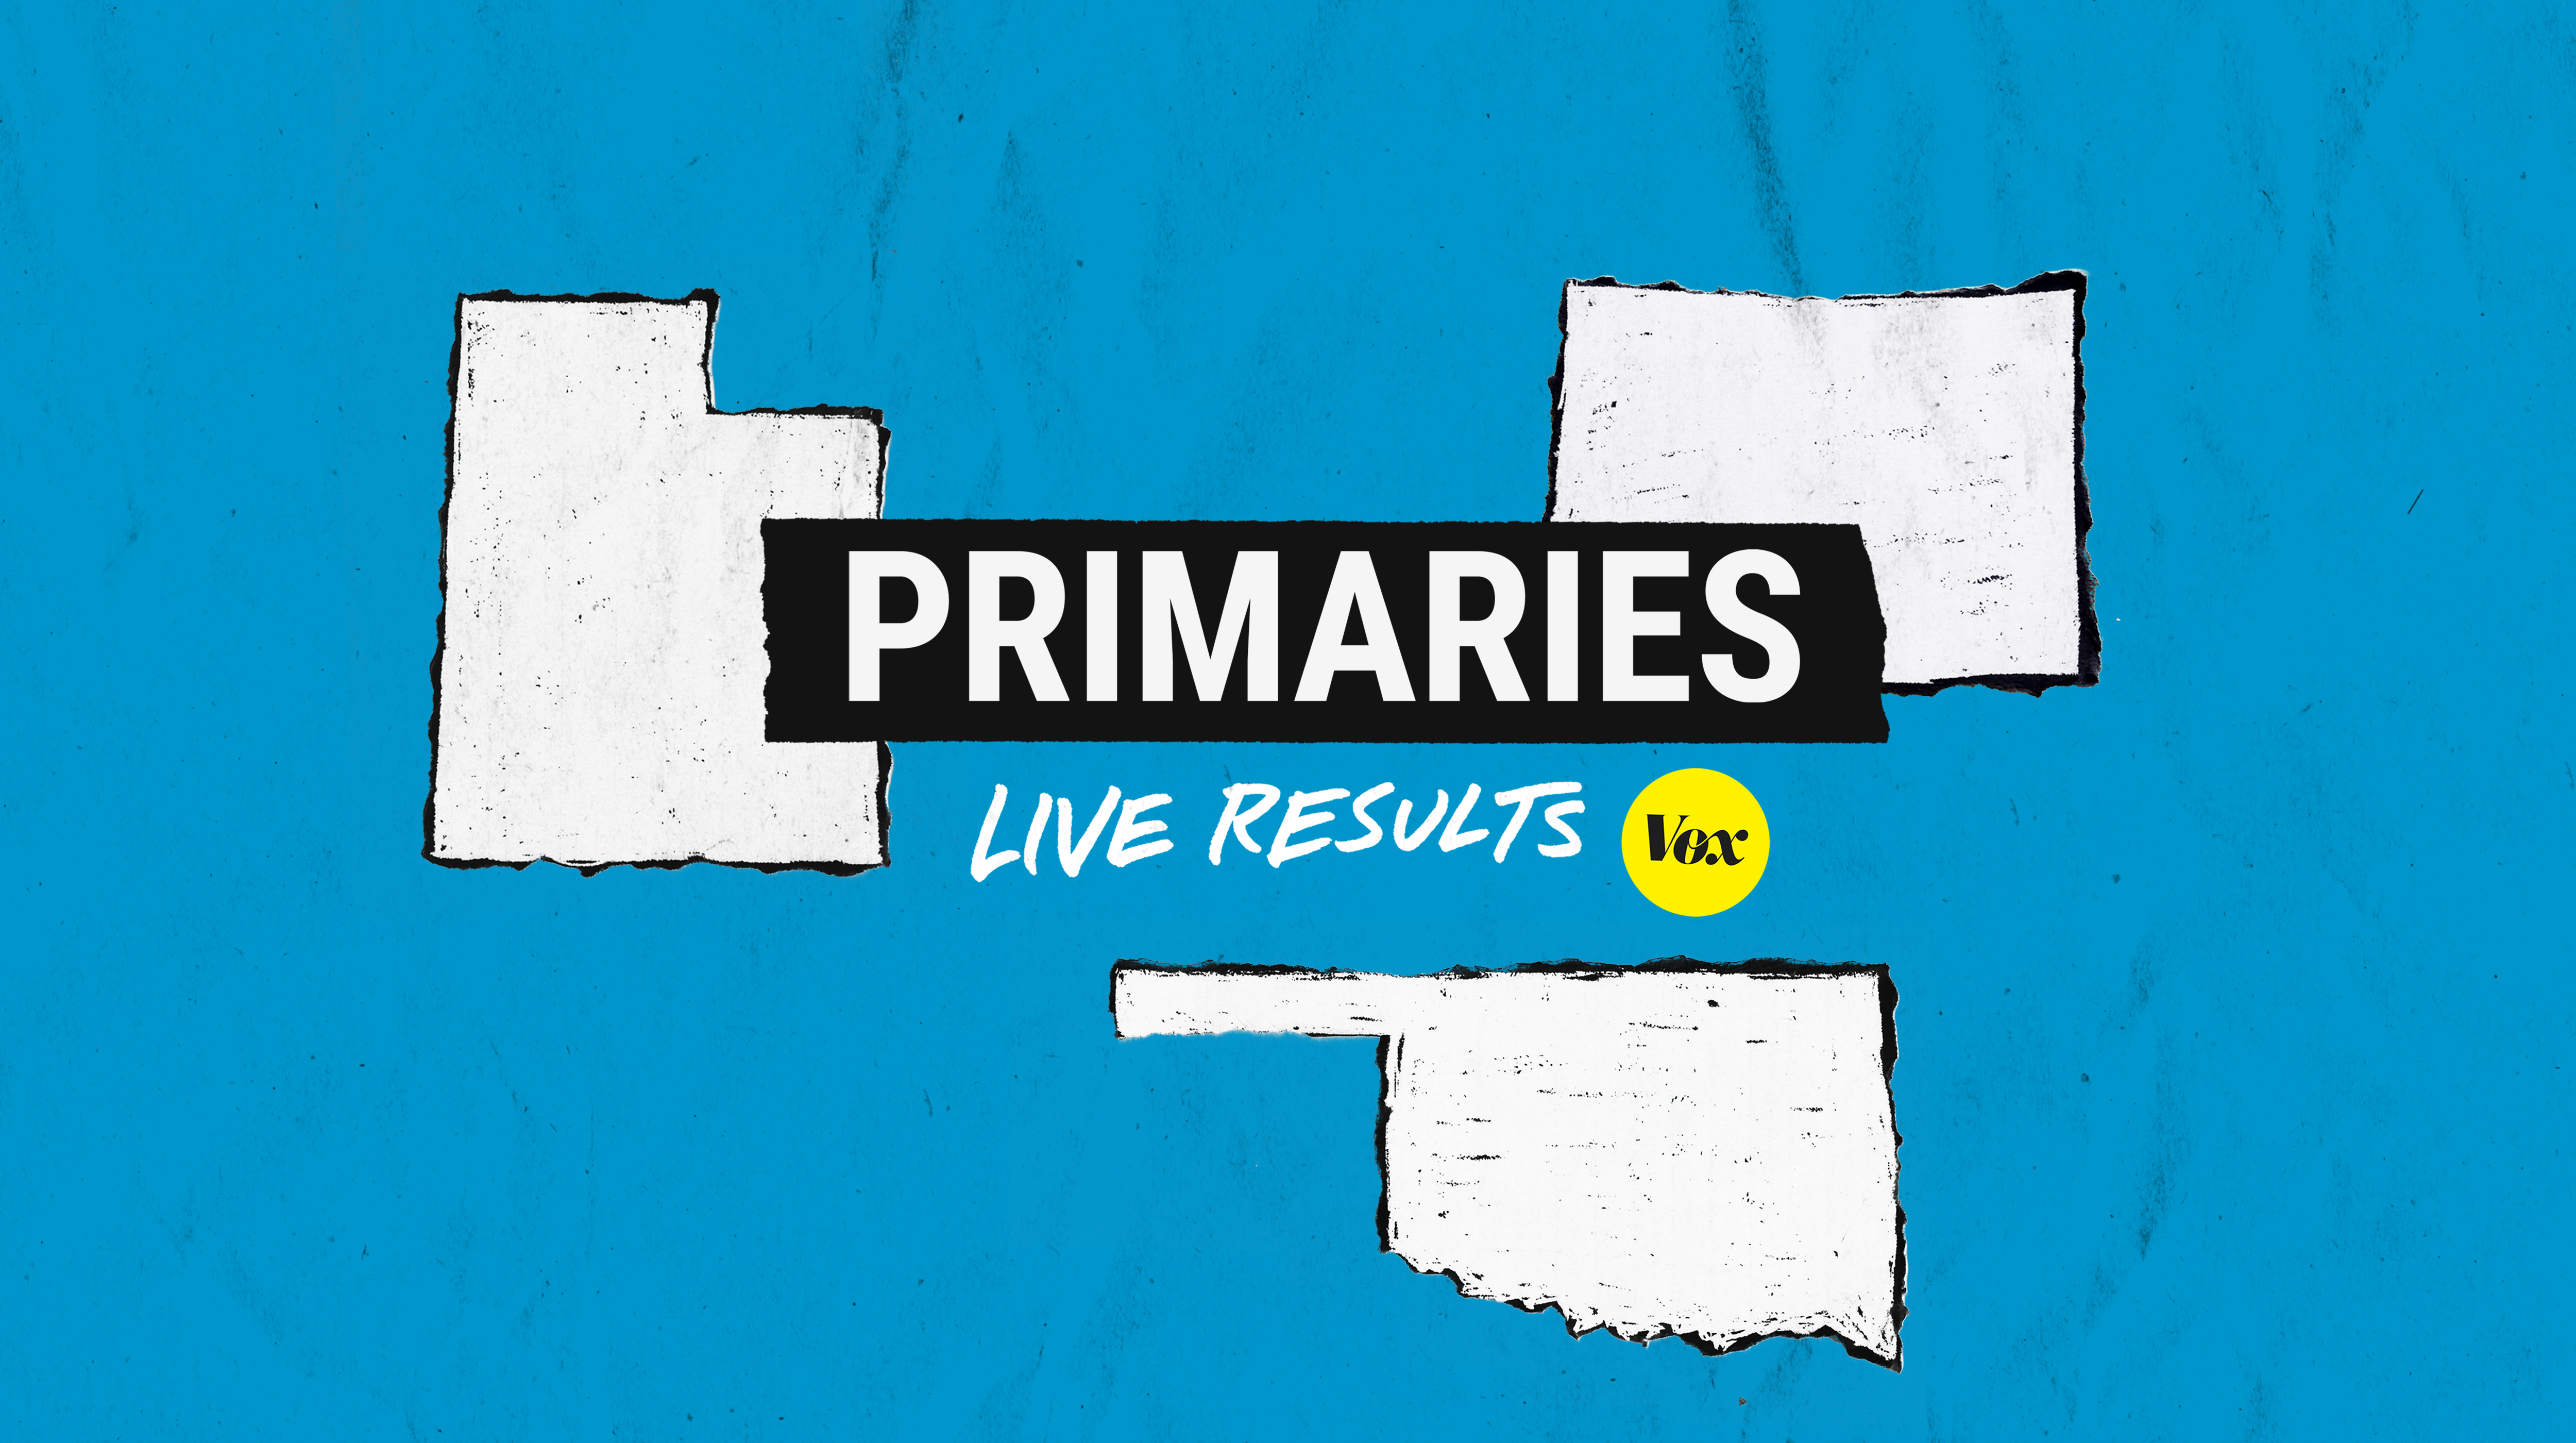 Vox primary live results for Colorado, Utah, and Oklahoma .